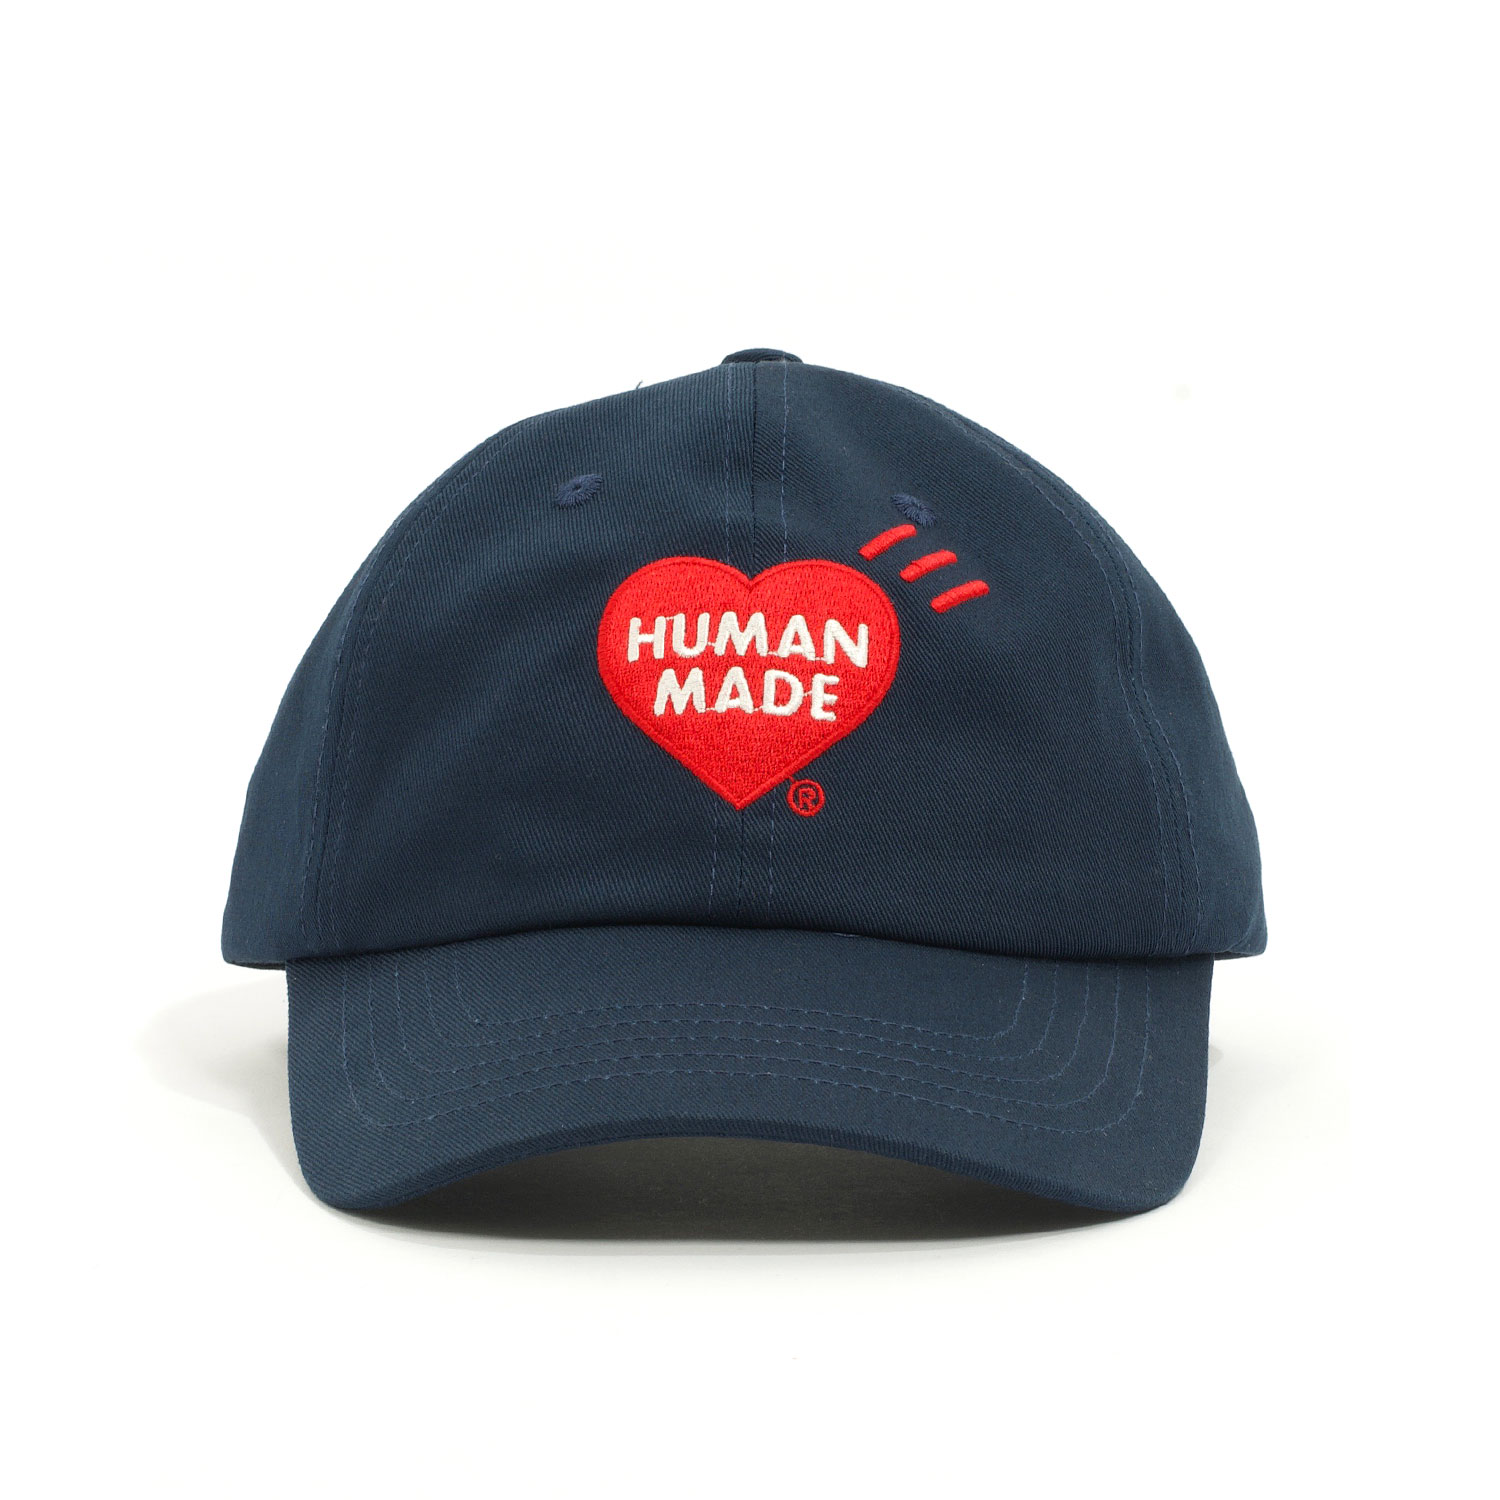 HUMAN MADE 6 PANEL TWILL CAP | hartwellspremium.com